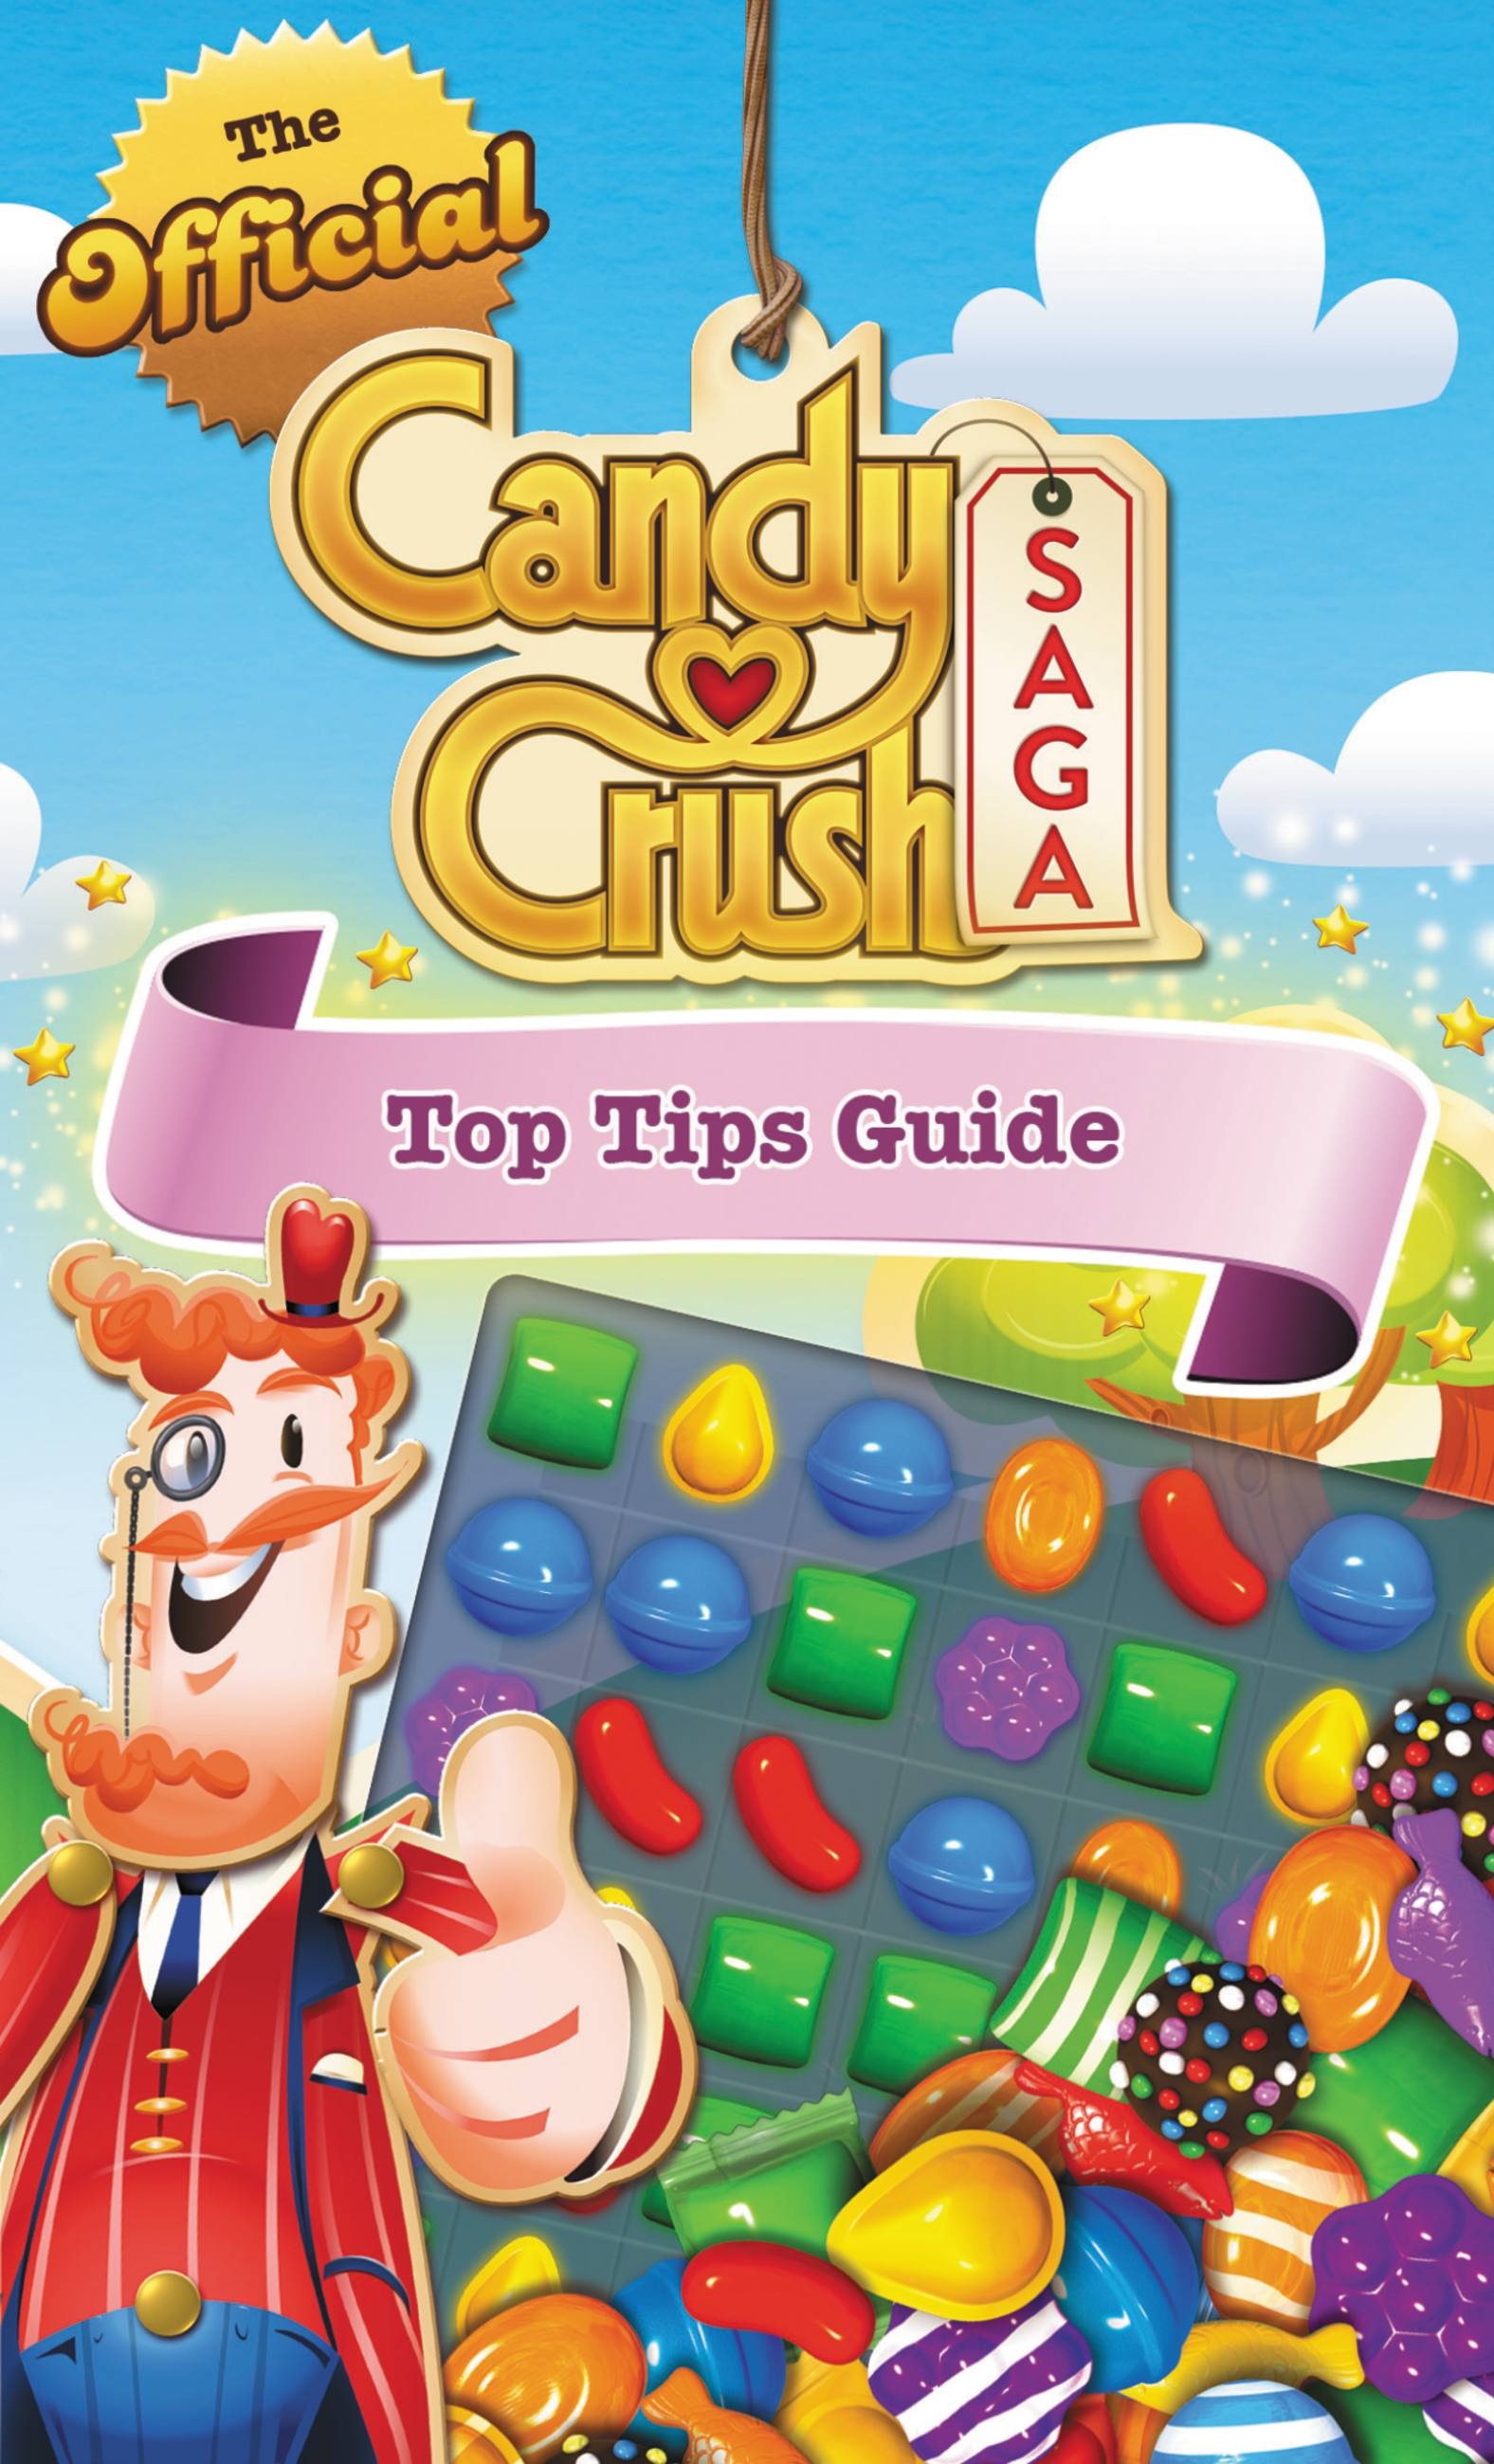 How long is Candy Crush Saga?